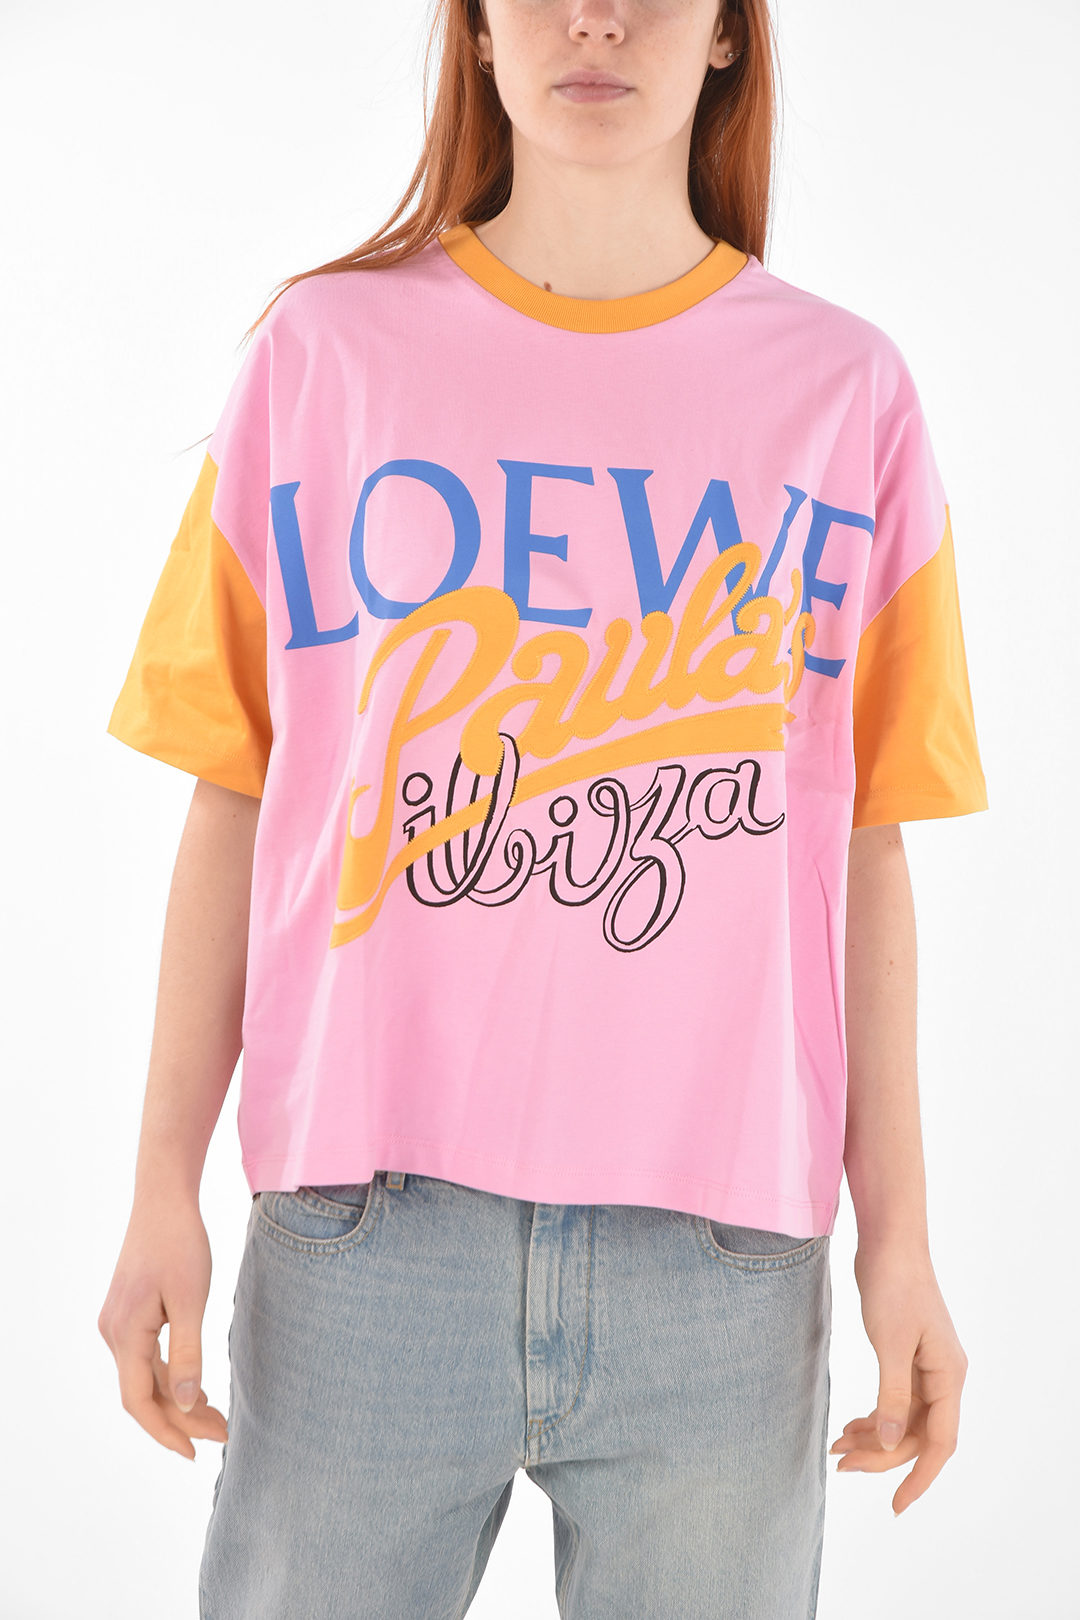 Tシャツ LOEWE/ Paula’s Ibiza着丈56cm